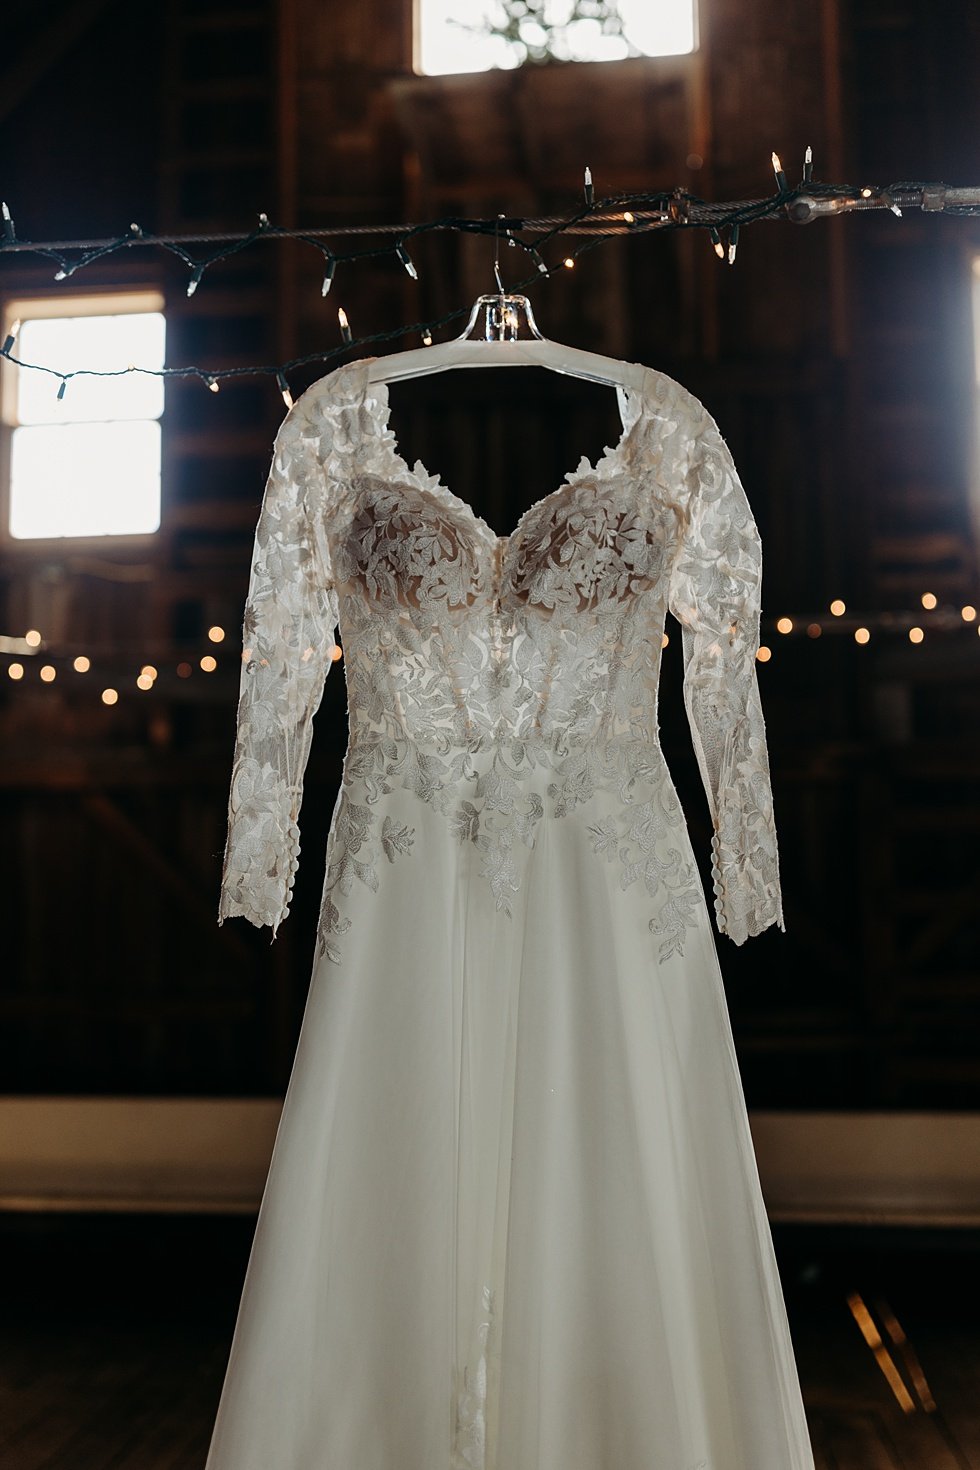  Bride's dress and details. Wedding dressing hanging in barn. Outdoor summer wedding at Villwock Farms , Edwardsport, IN 